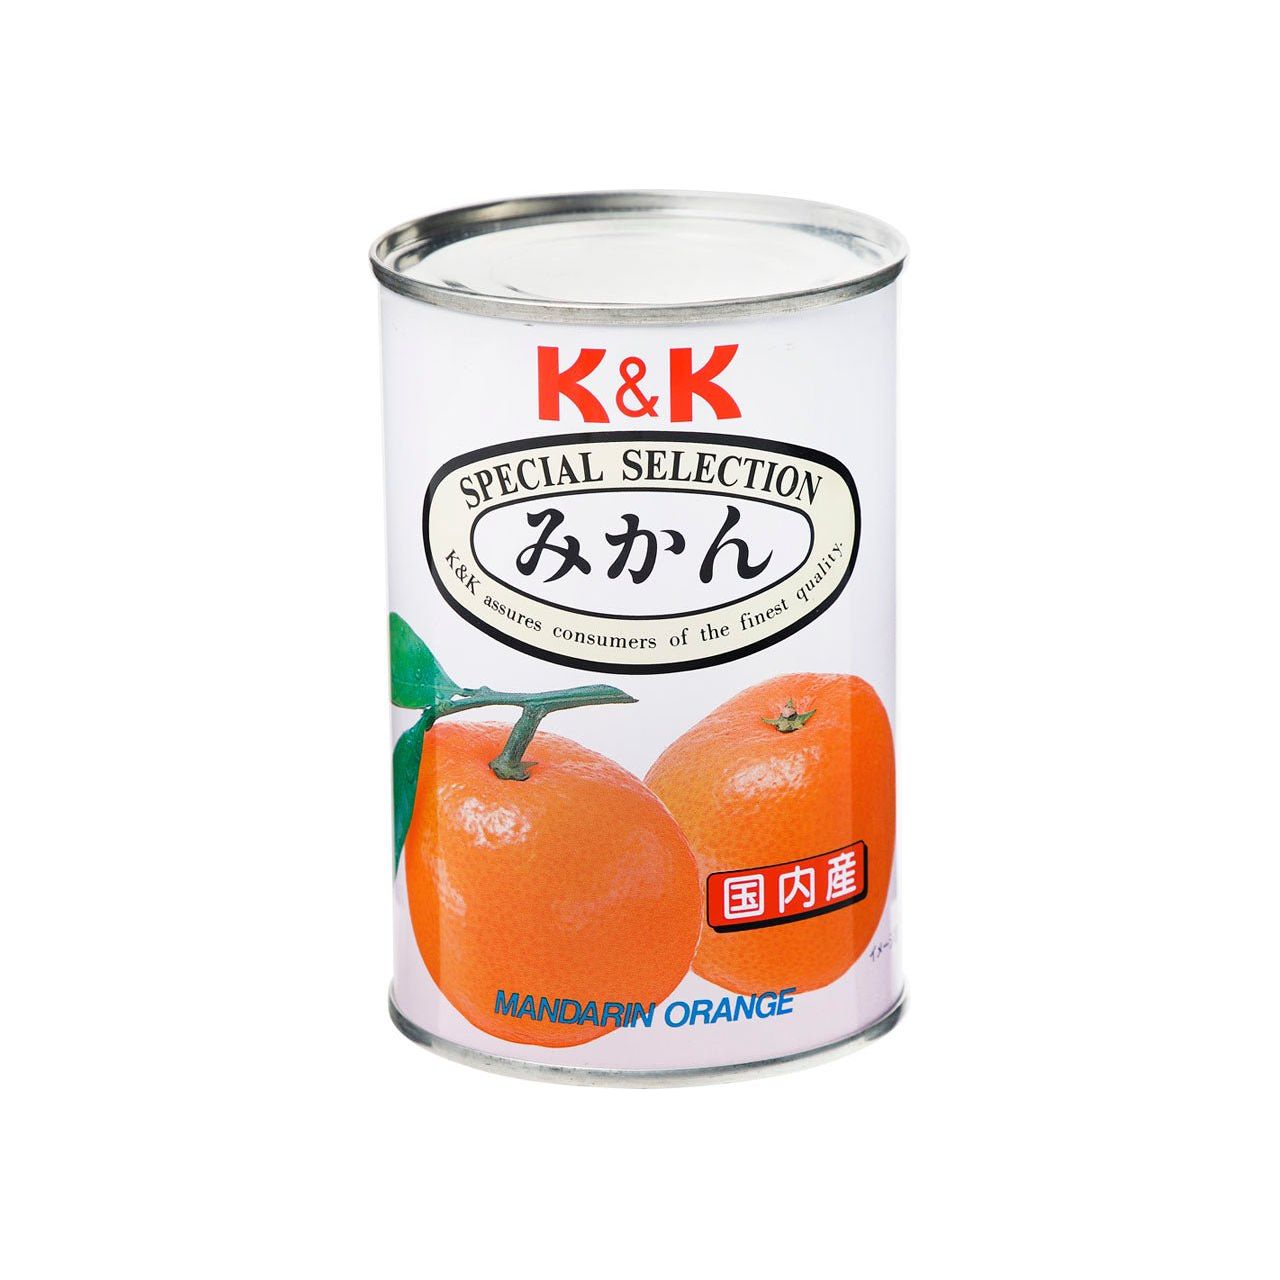 K & K Mandarin